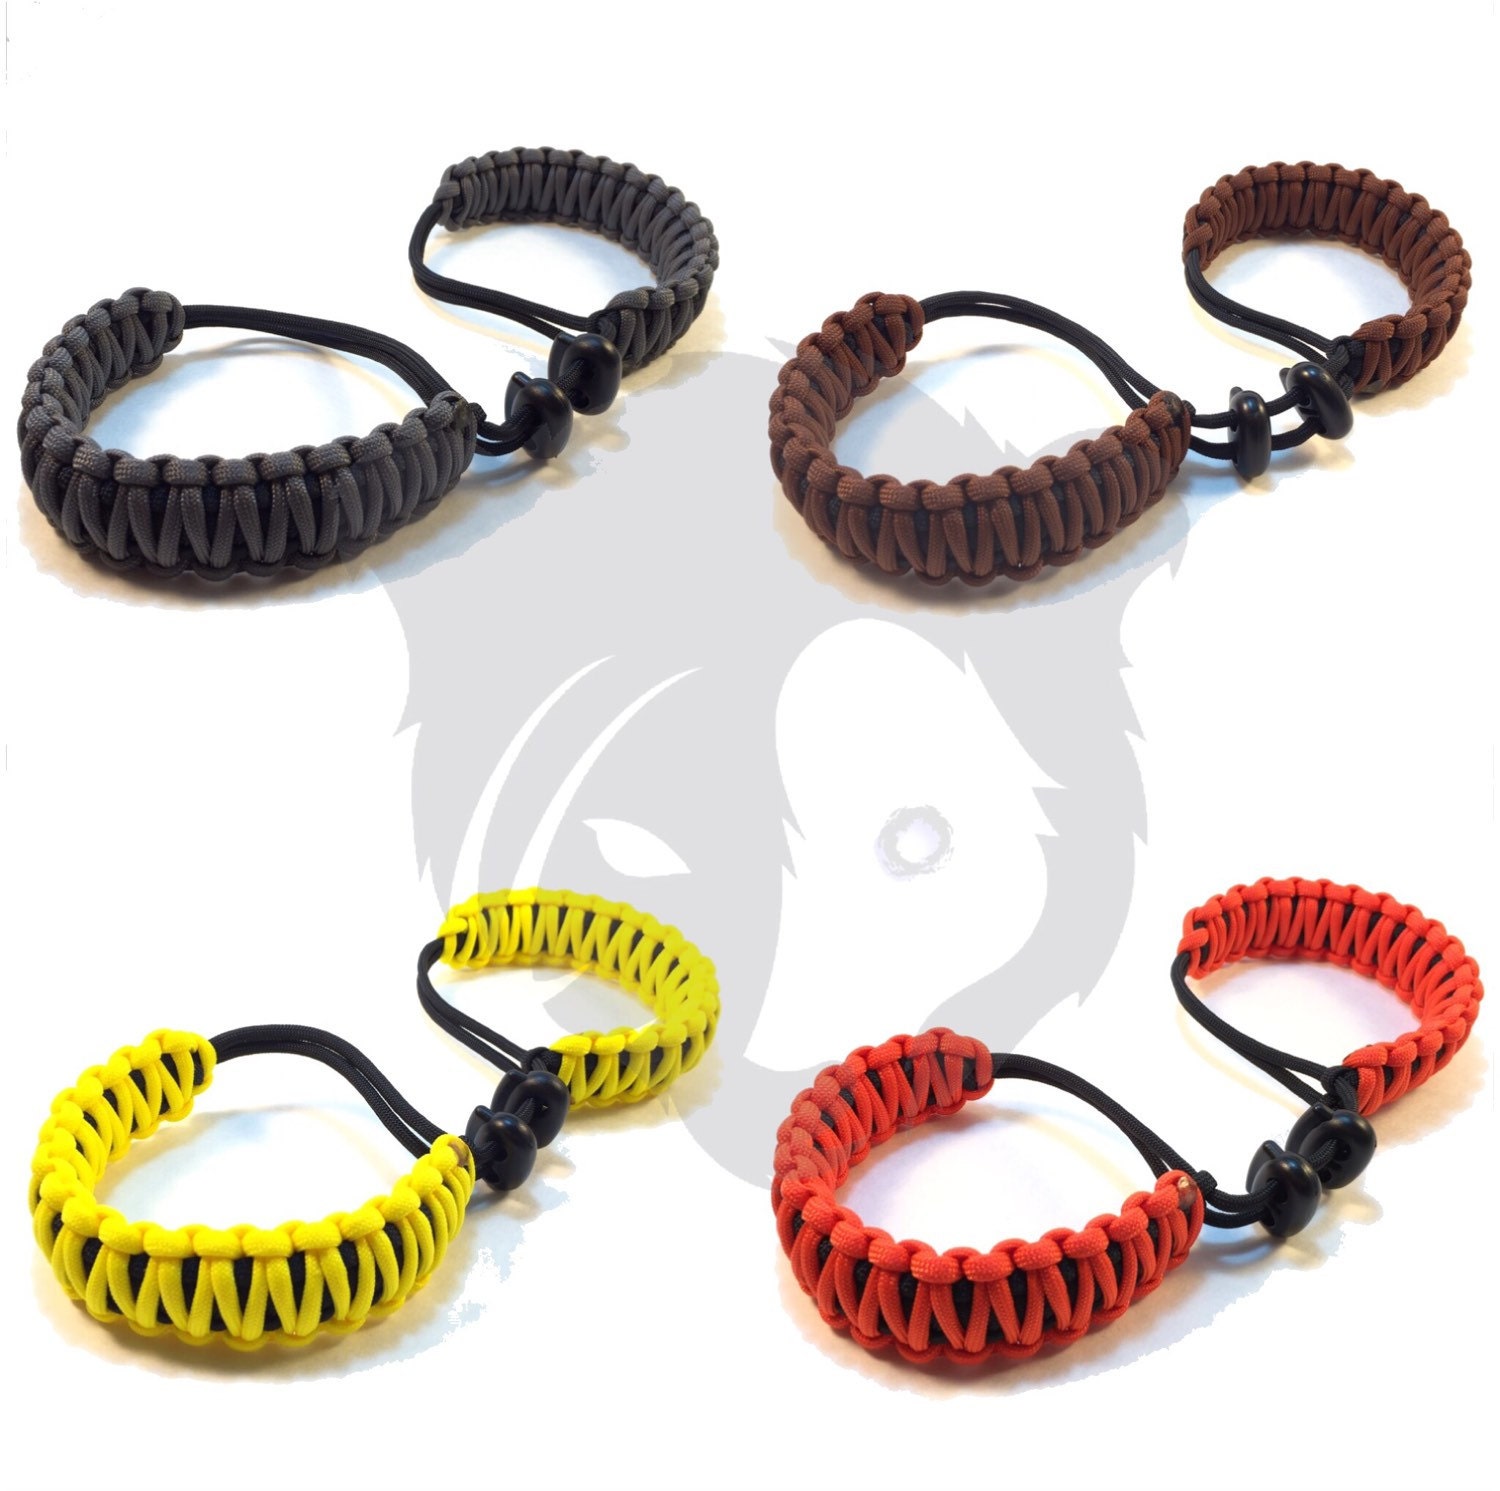 Handmade Adjustable Paracord Handcuffs For Sale Nylon